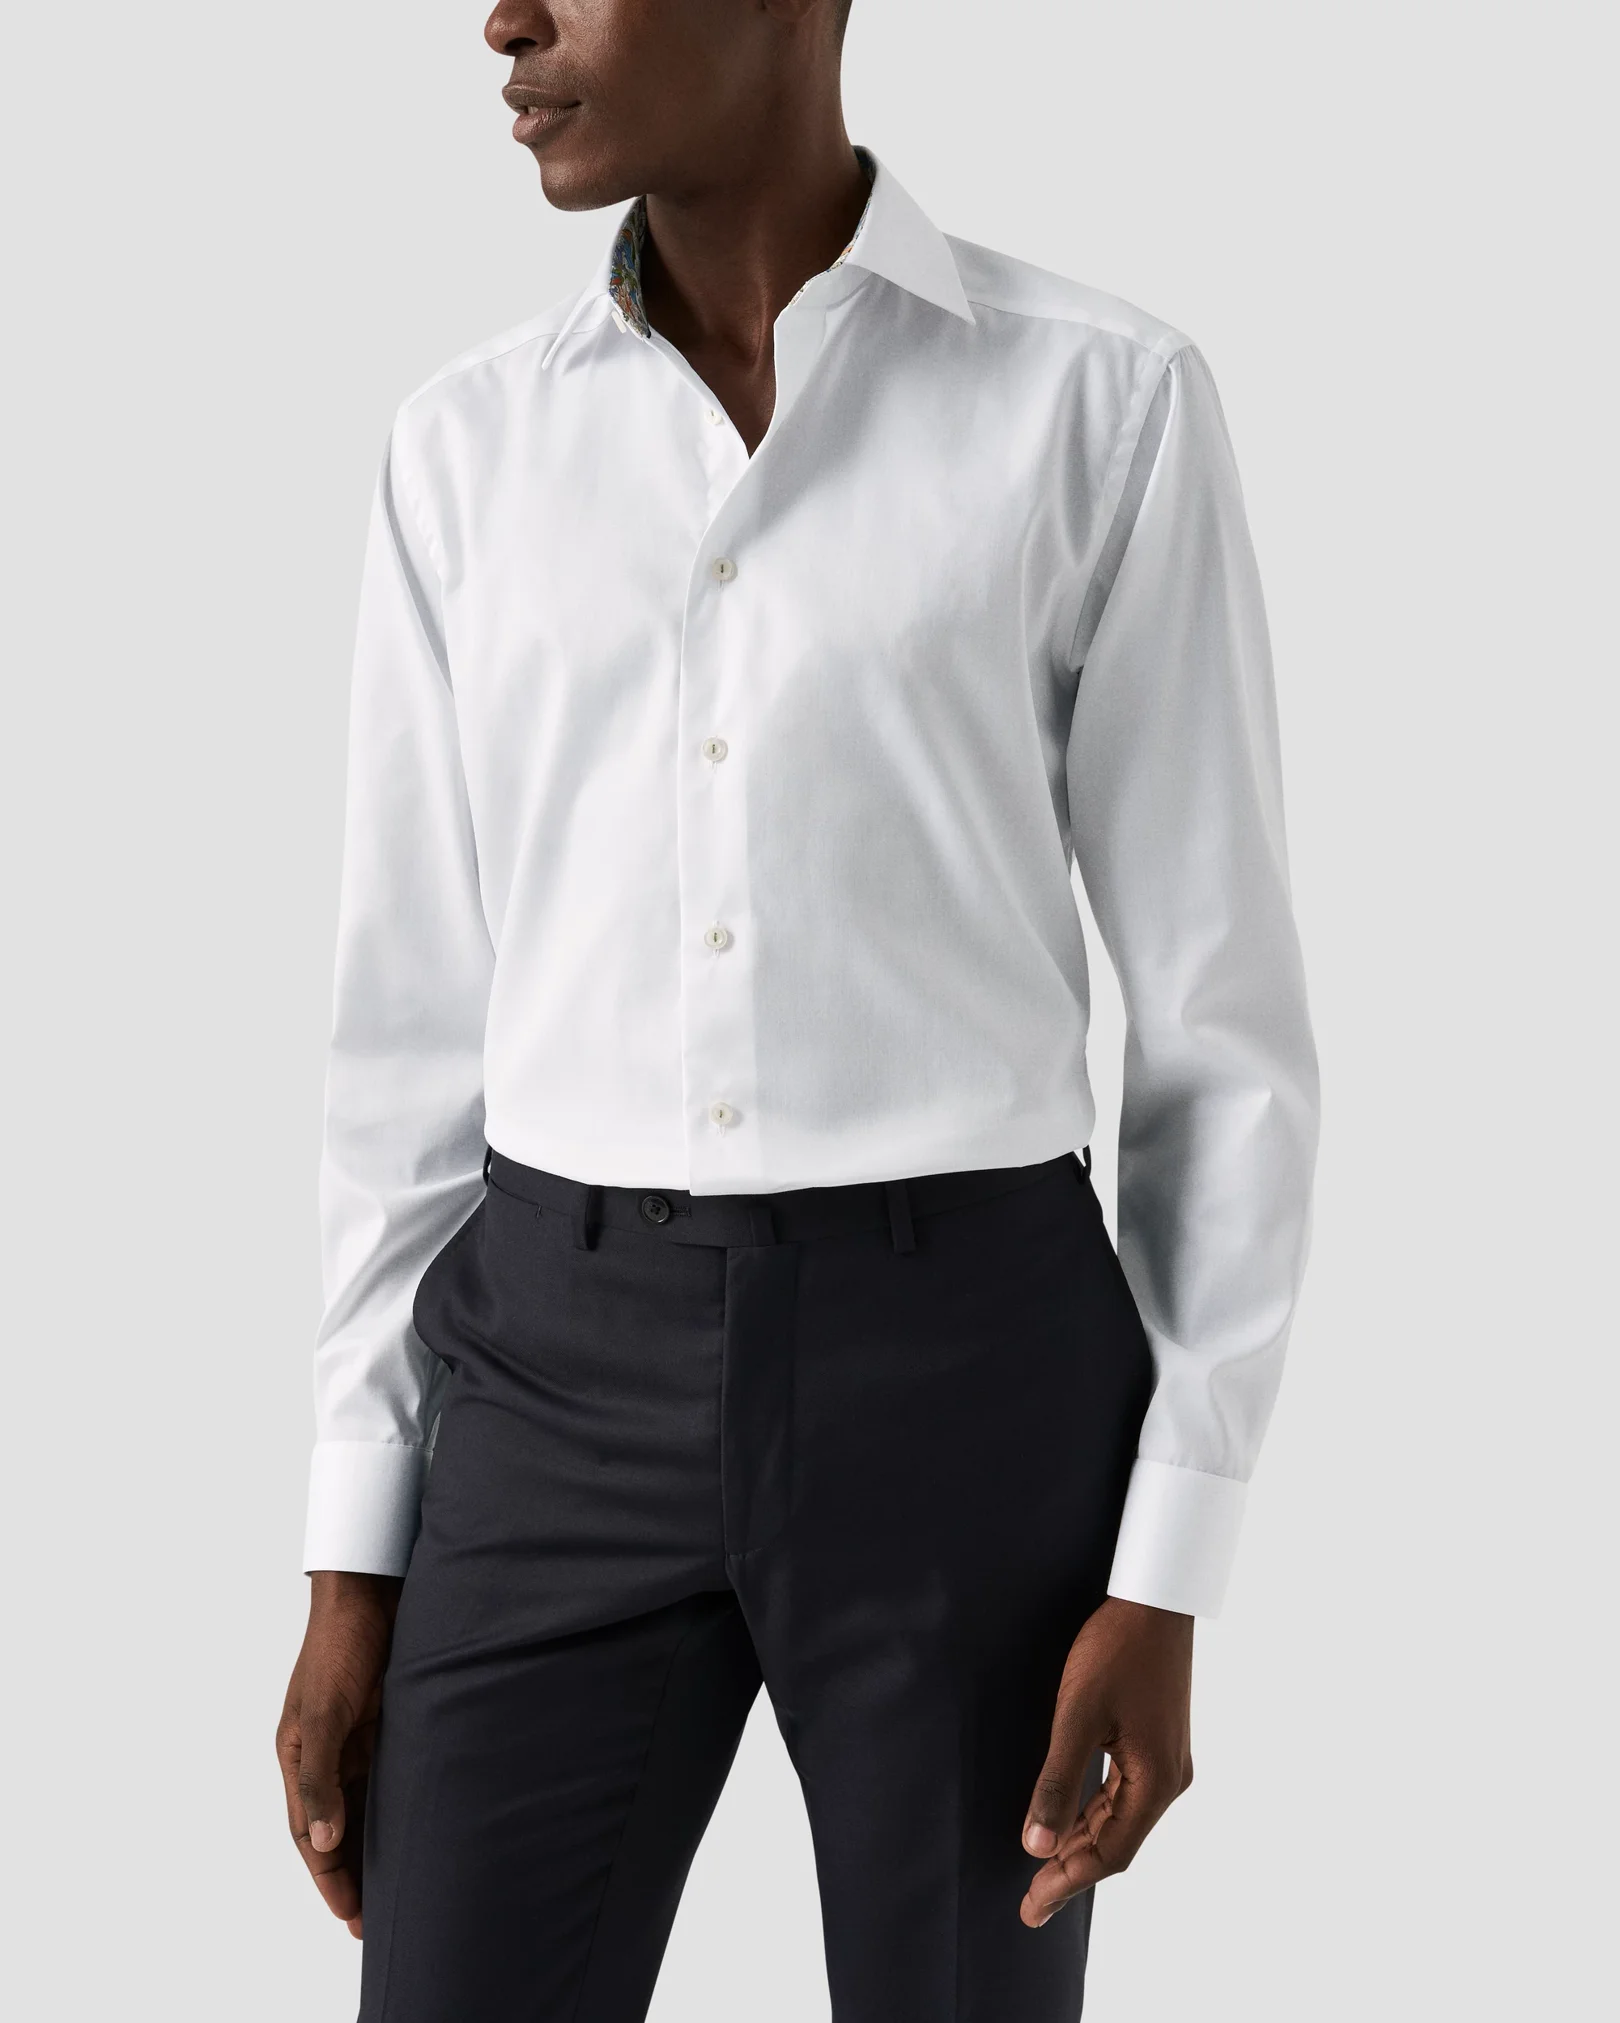 Eton - white signature twill floral cotrast shirt